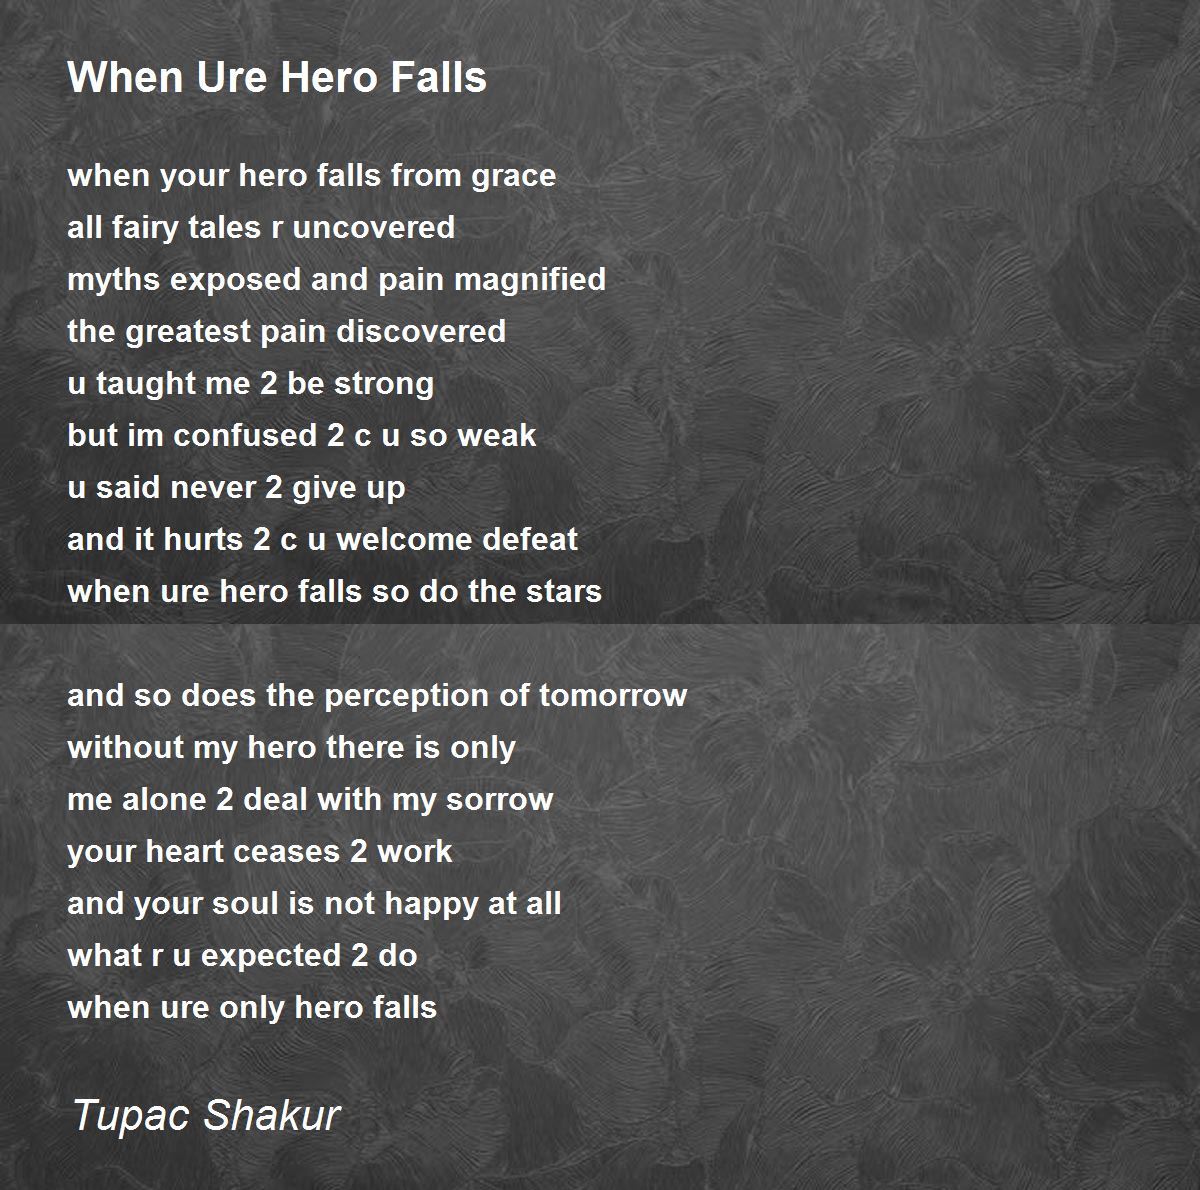 When Ure Hero Falls Poem by Tupac Shakur - Poem Hunter